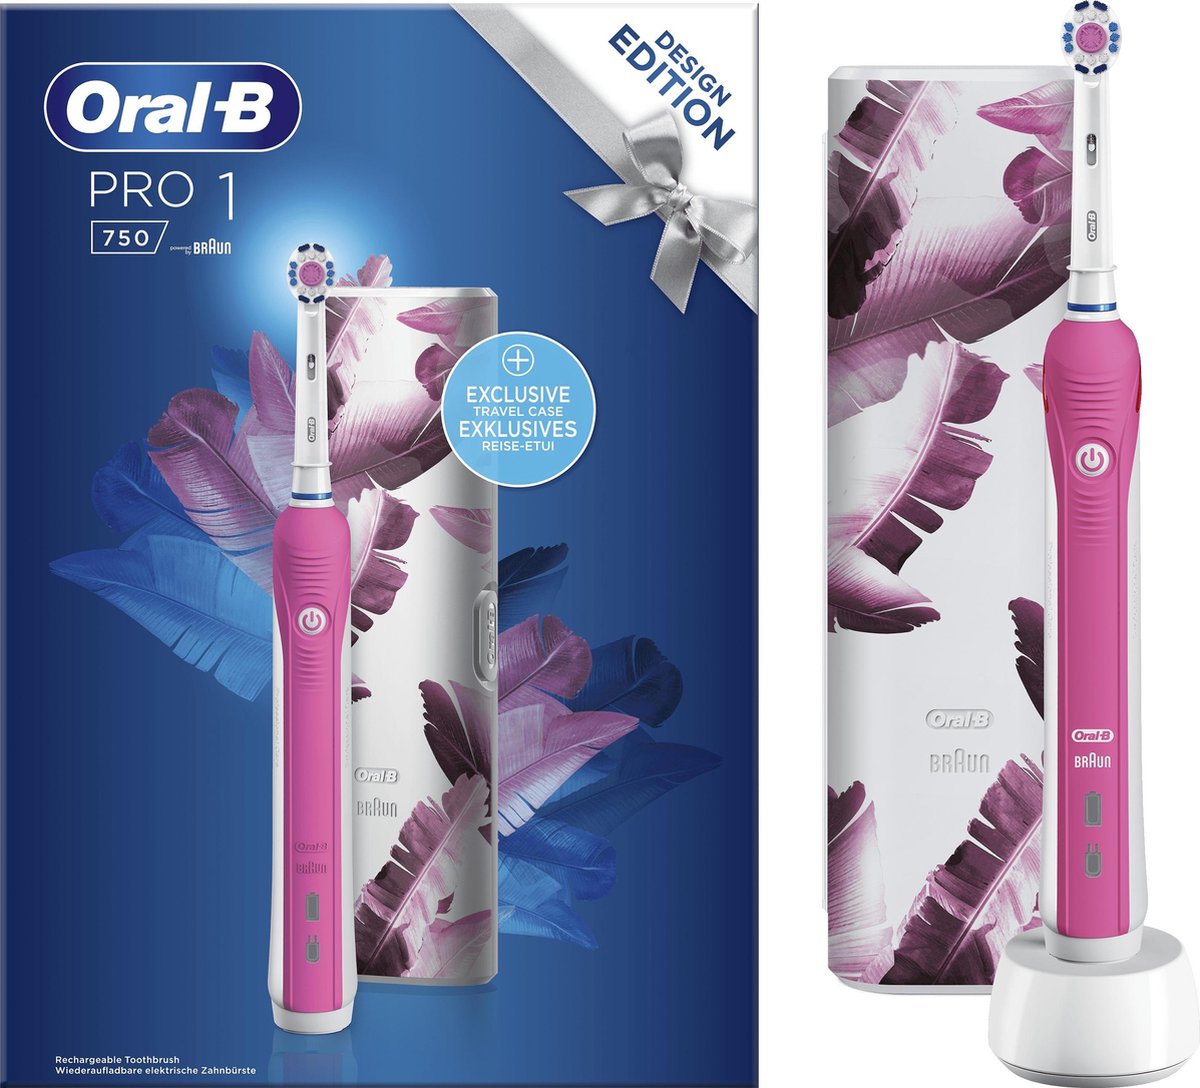 Oral-B Pro 1 - 750 - Elektrische Tandenborstel + Bonusreisetui - Oral B